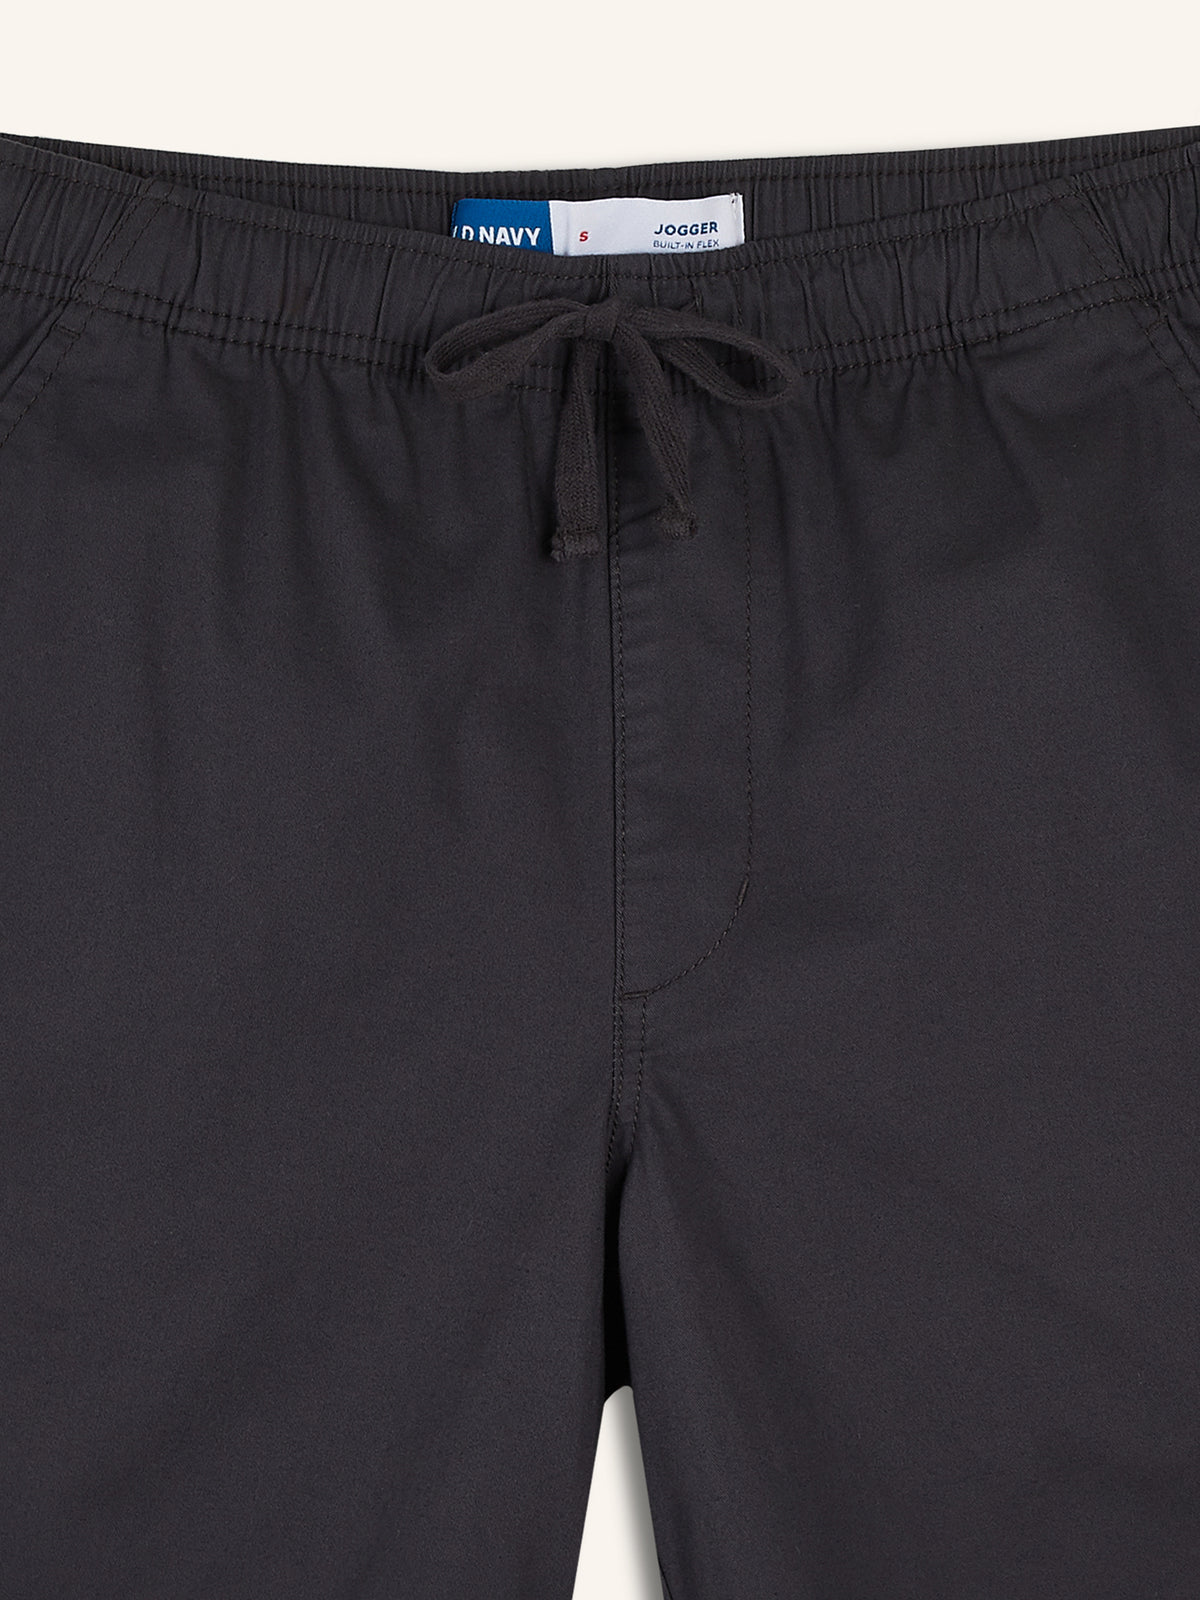 OGC Chino Jogger Shorts -- 5-inch inseam